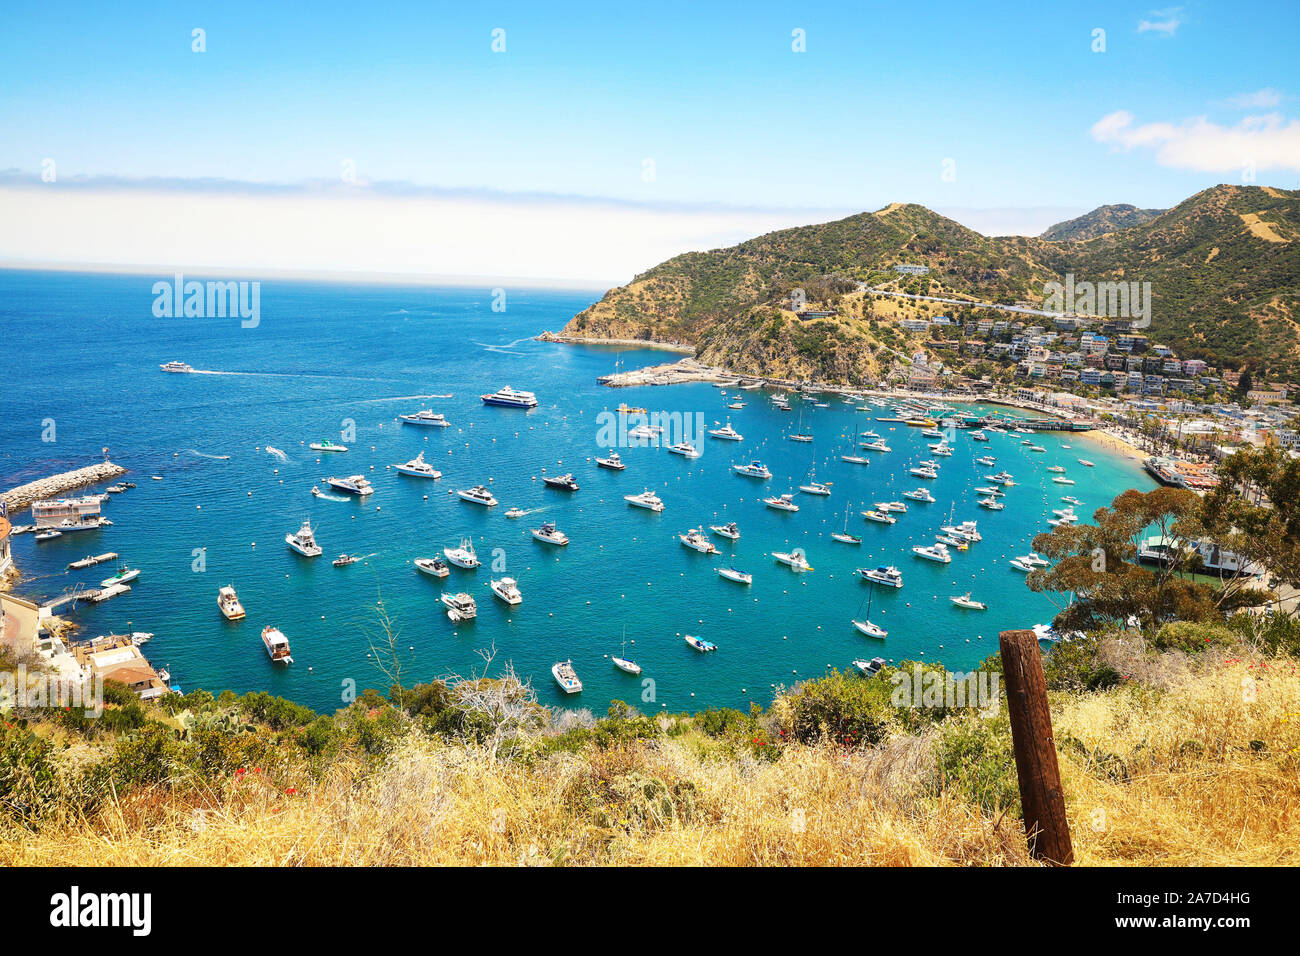 California island paradise. An ideal day captured on the Southern California island getaway - Catalina. Stock Photo